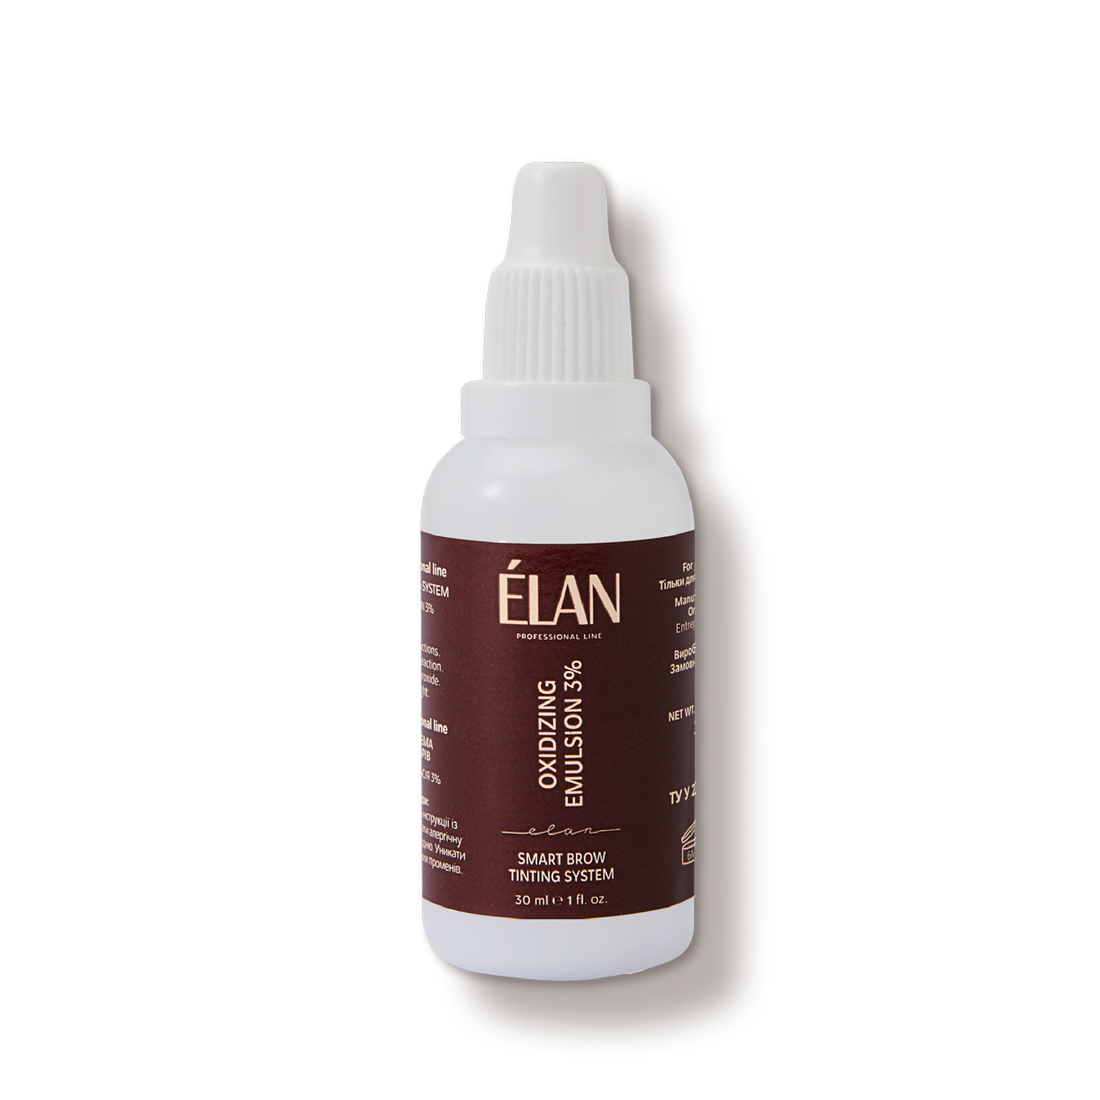 ÉLAN - Oxidising Emulsion 3%